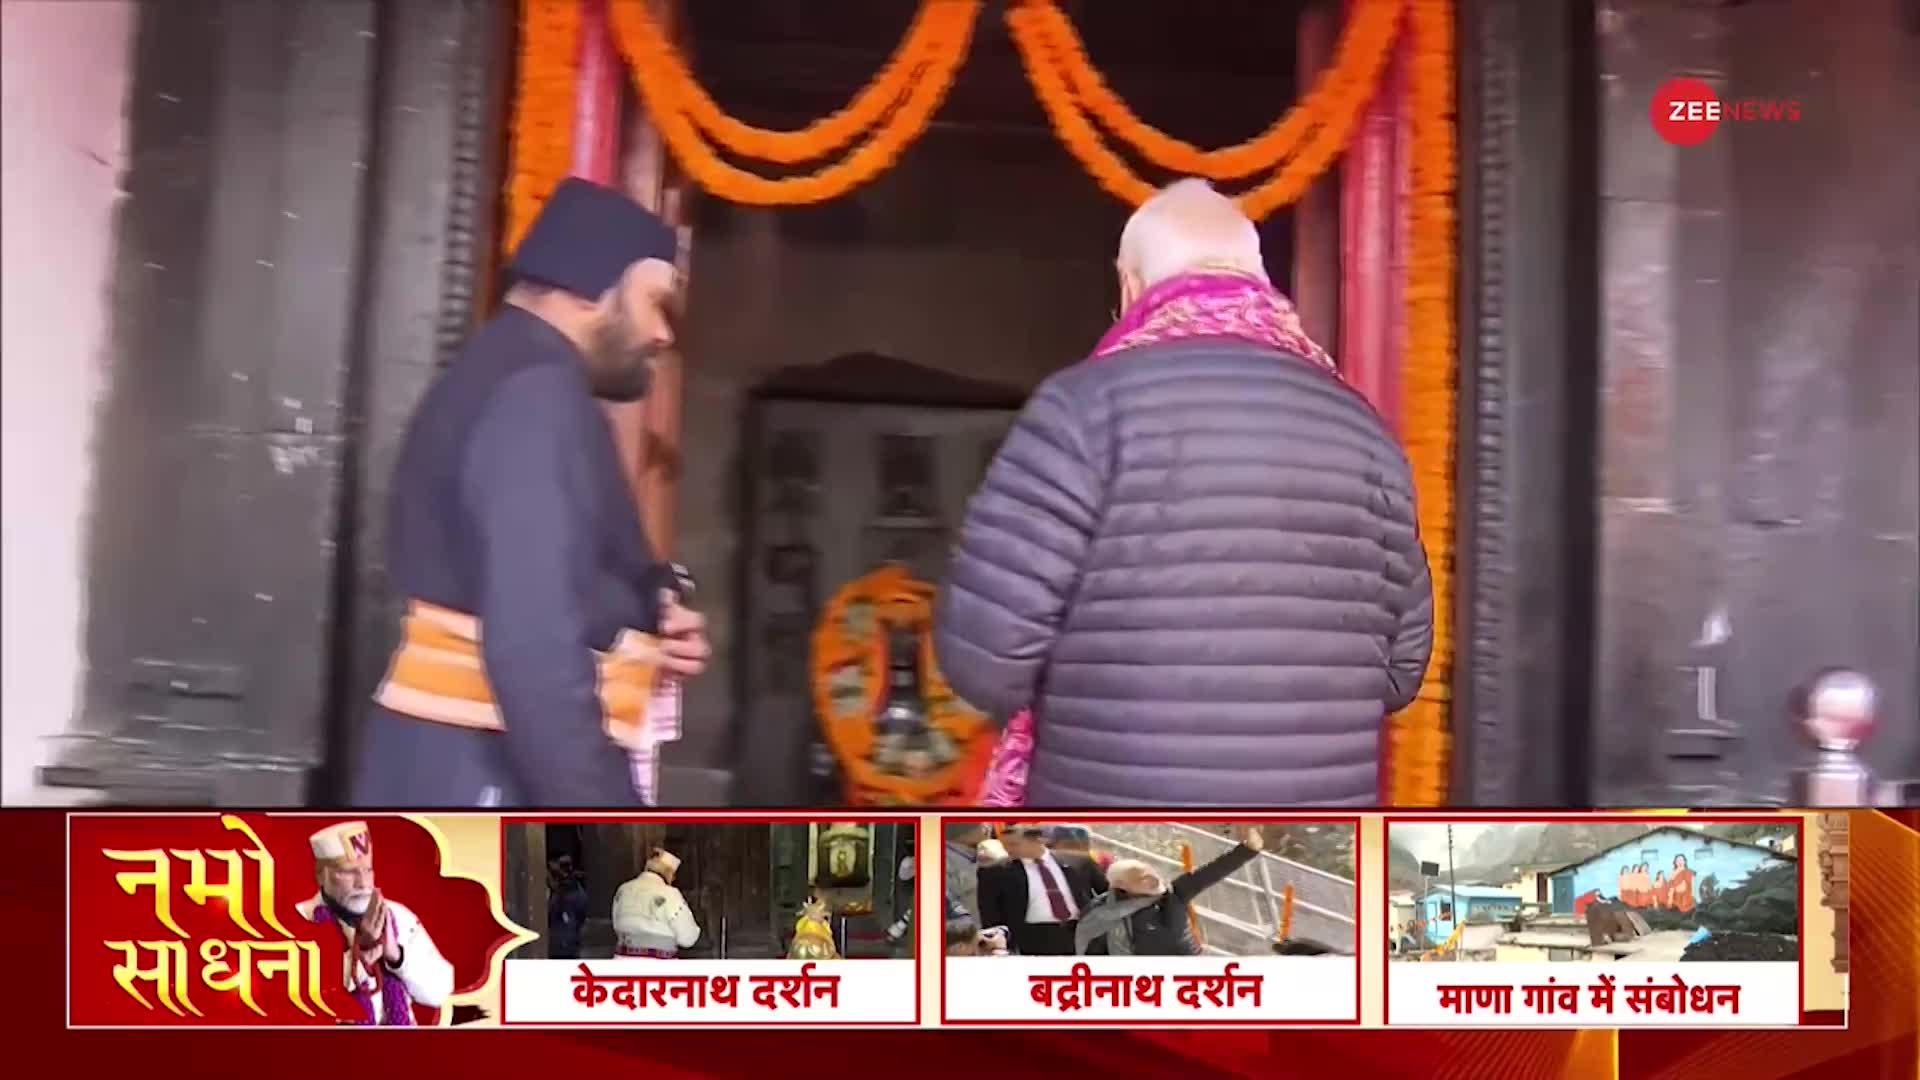 PM Modi Uttarakhand Visit: बदरी विशाल के द्वार PM मोदी